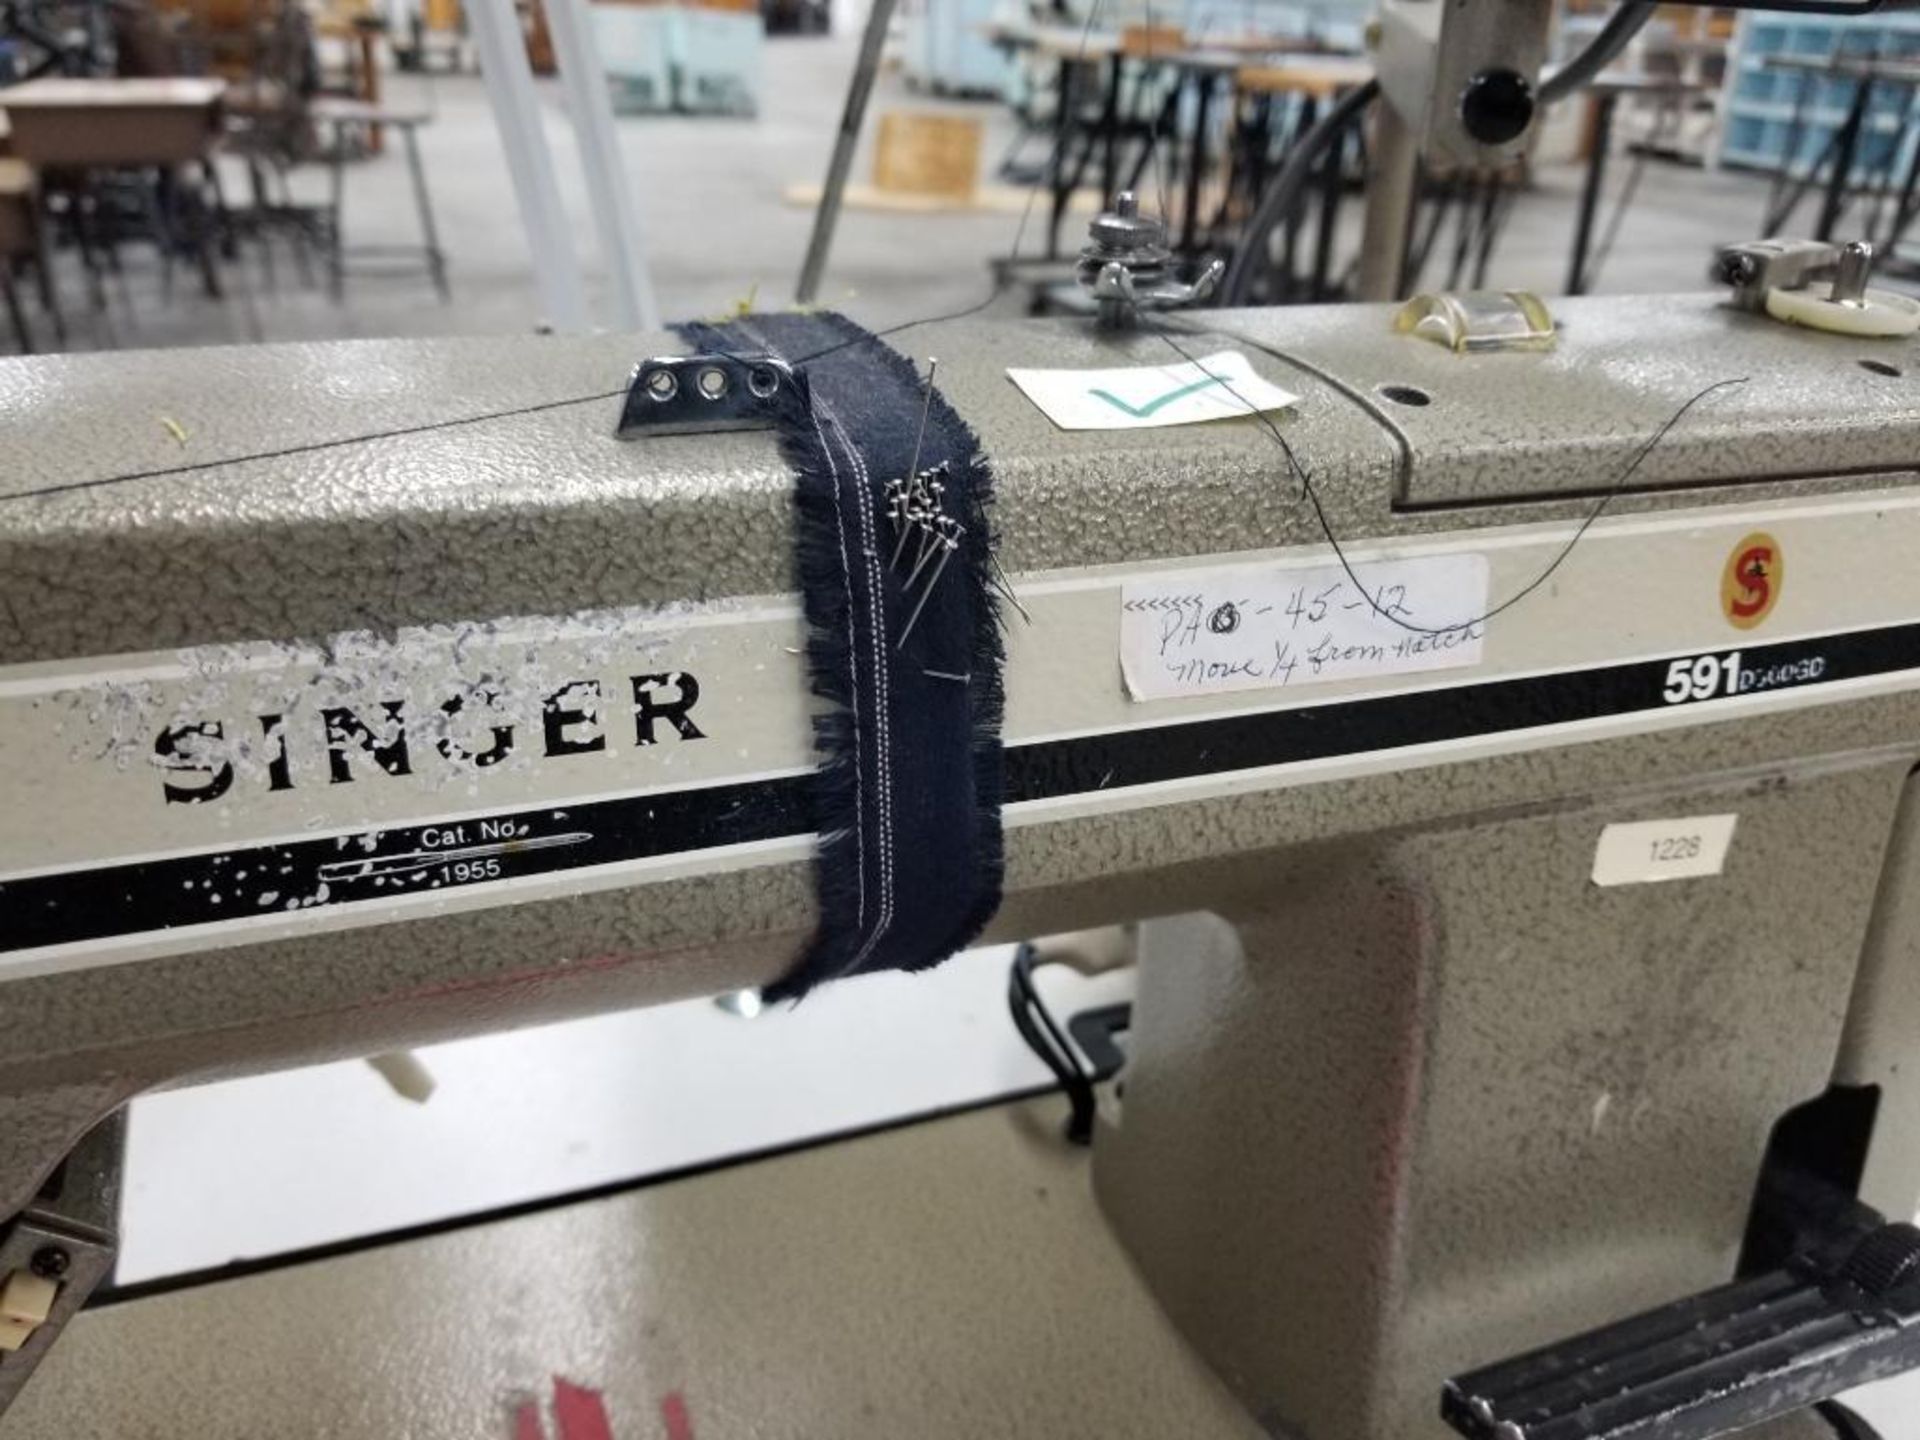 Singer single needle industrial sewing machine. Model 591. Serial #U921310412. 3 phase, 220-240v. - Image 6 of 7